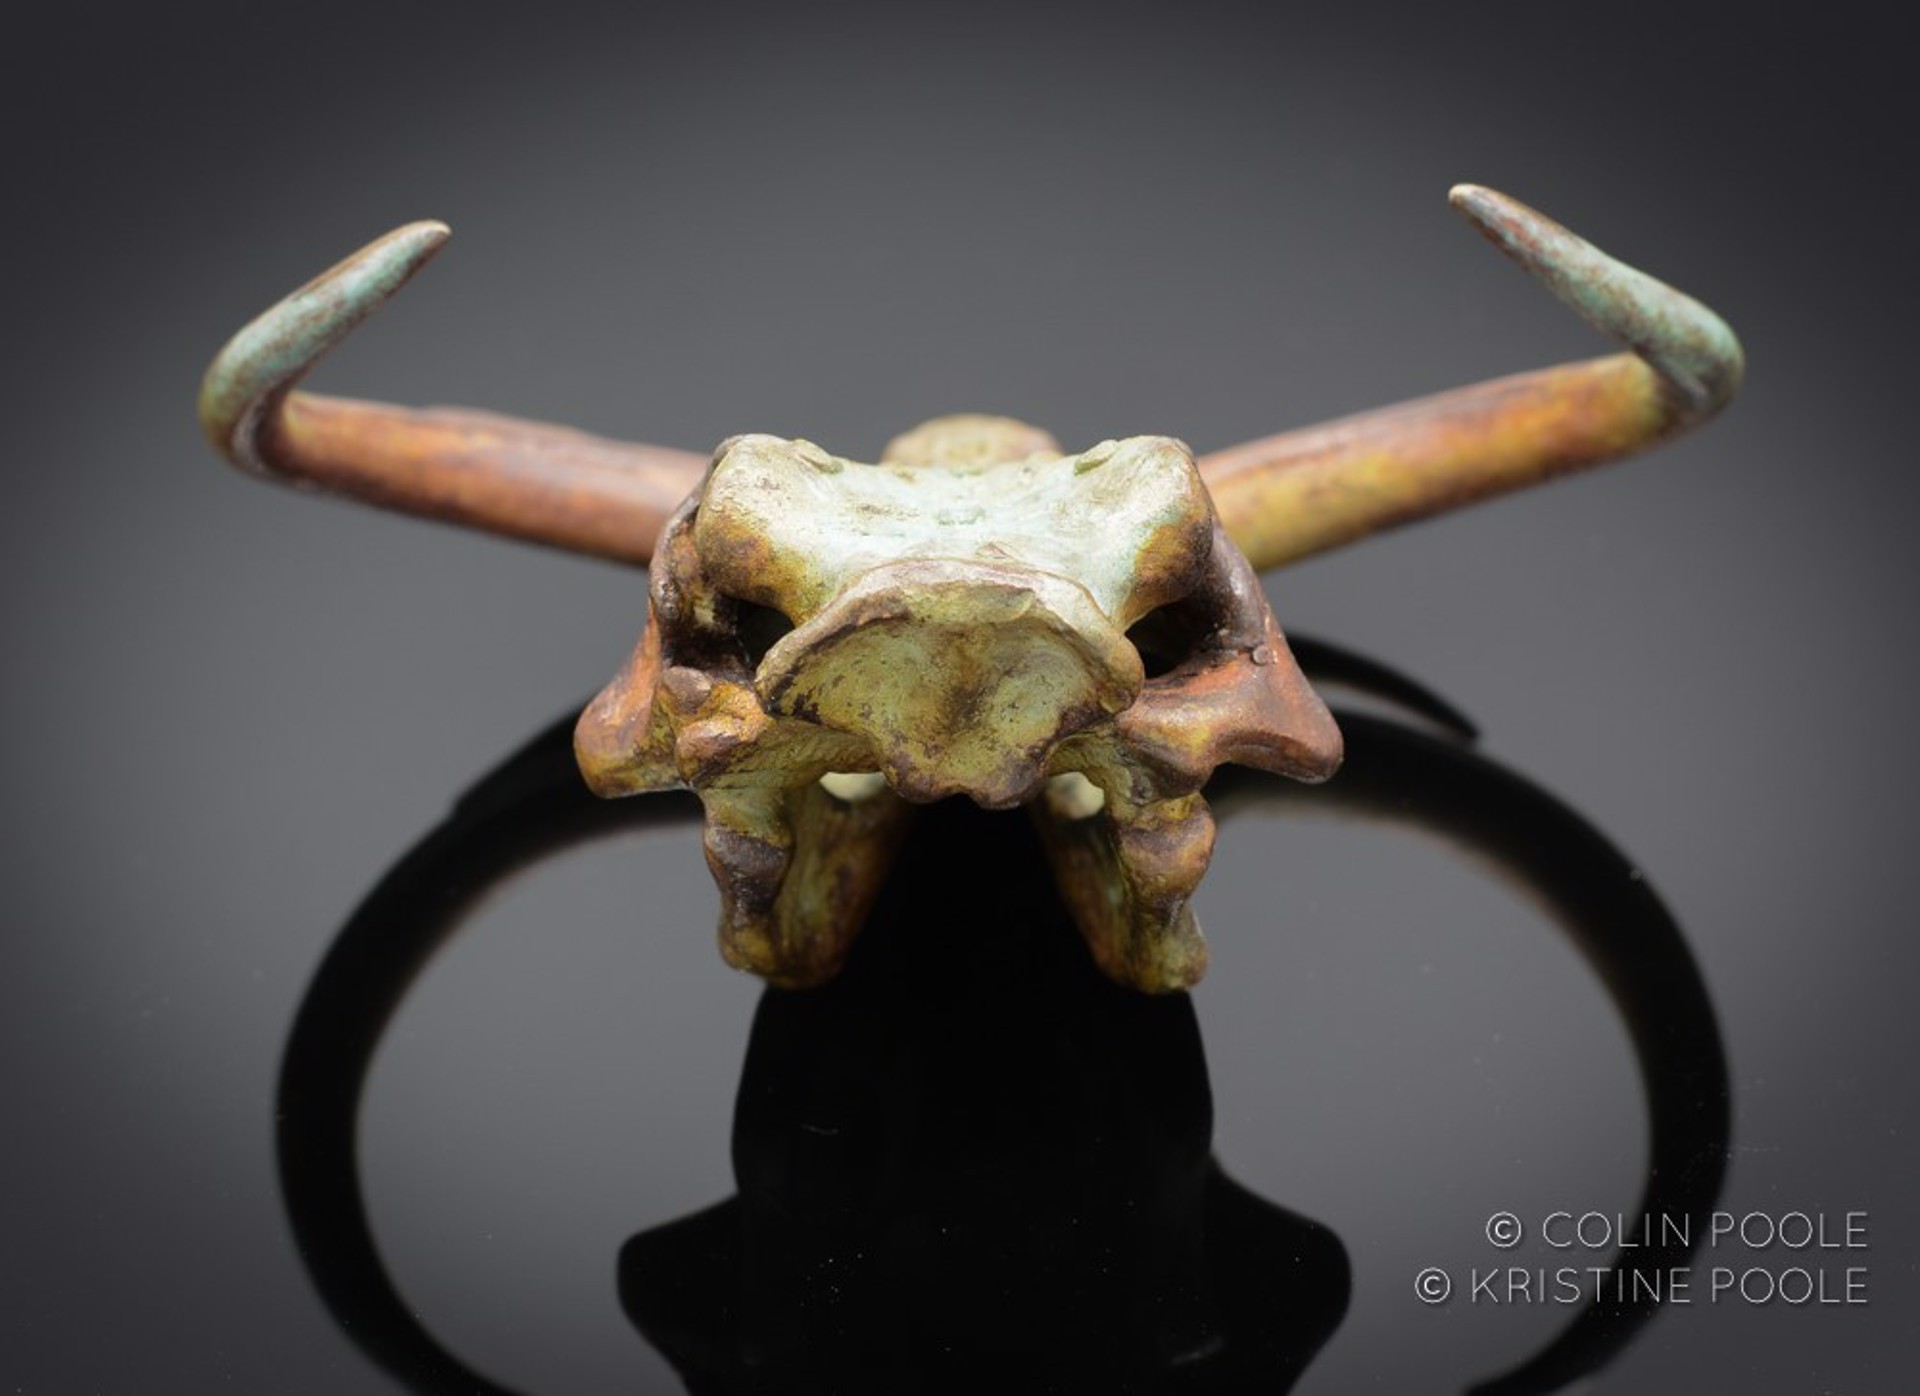 Grand Tusker  (Warthog)Talisman Skull 4 by Colin & Kristine Poole